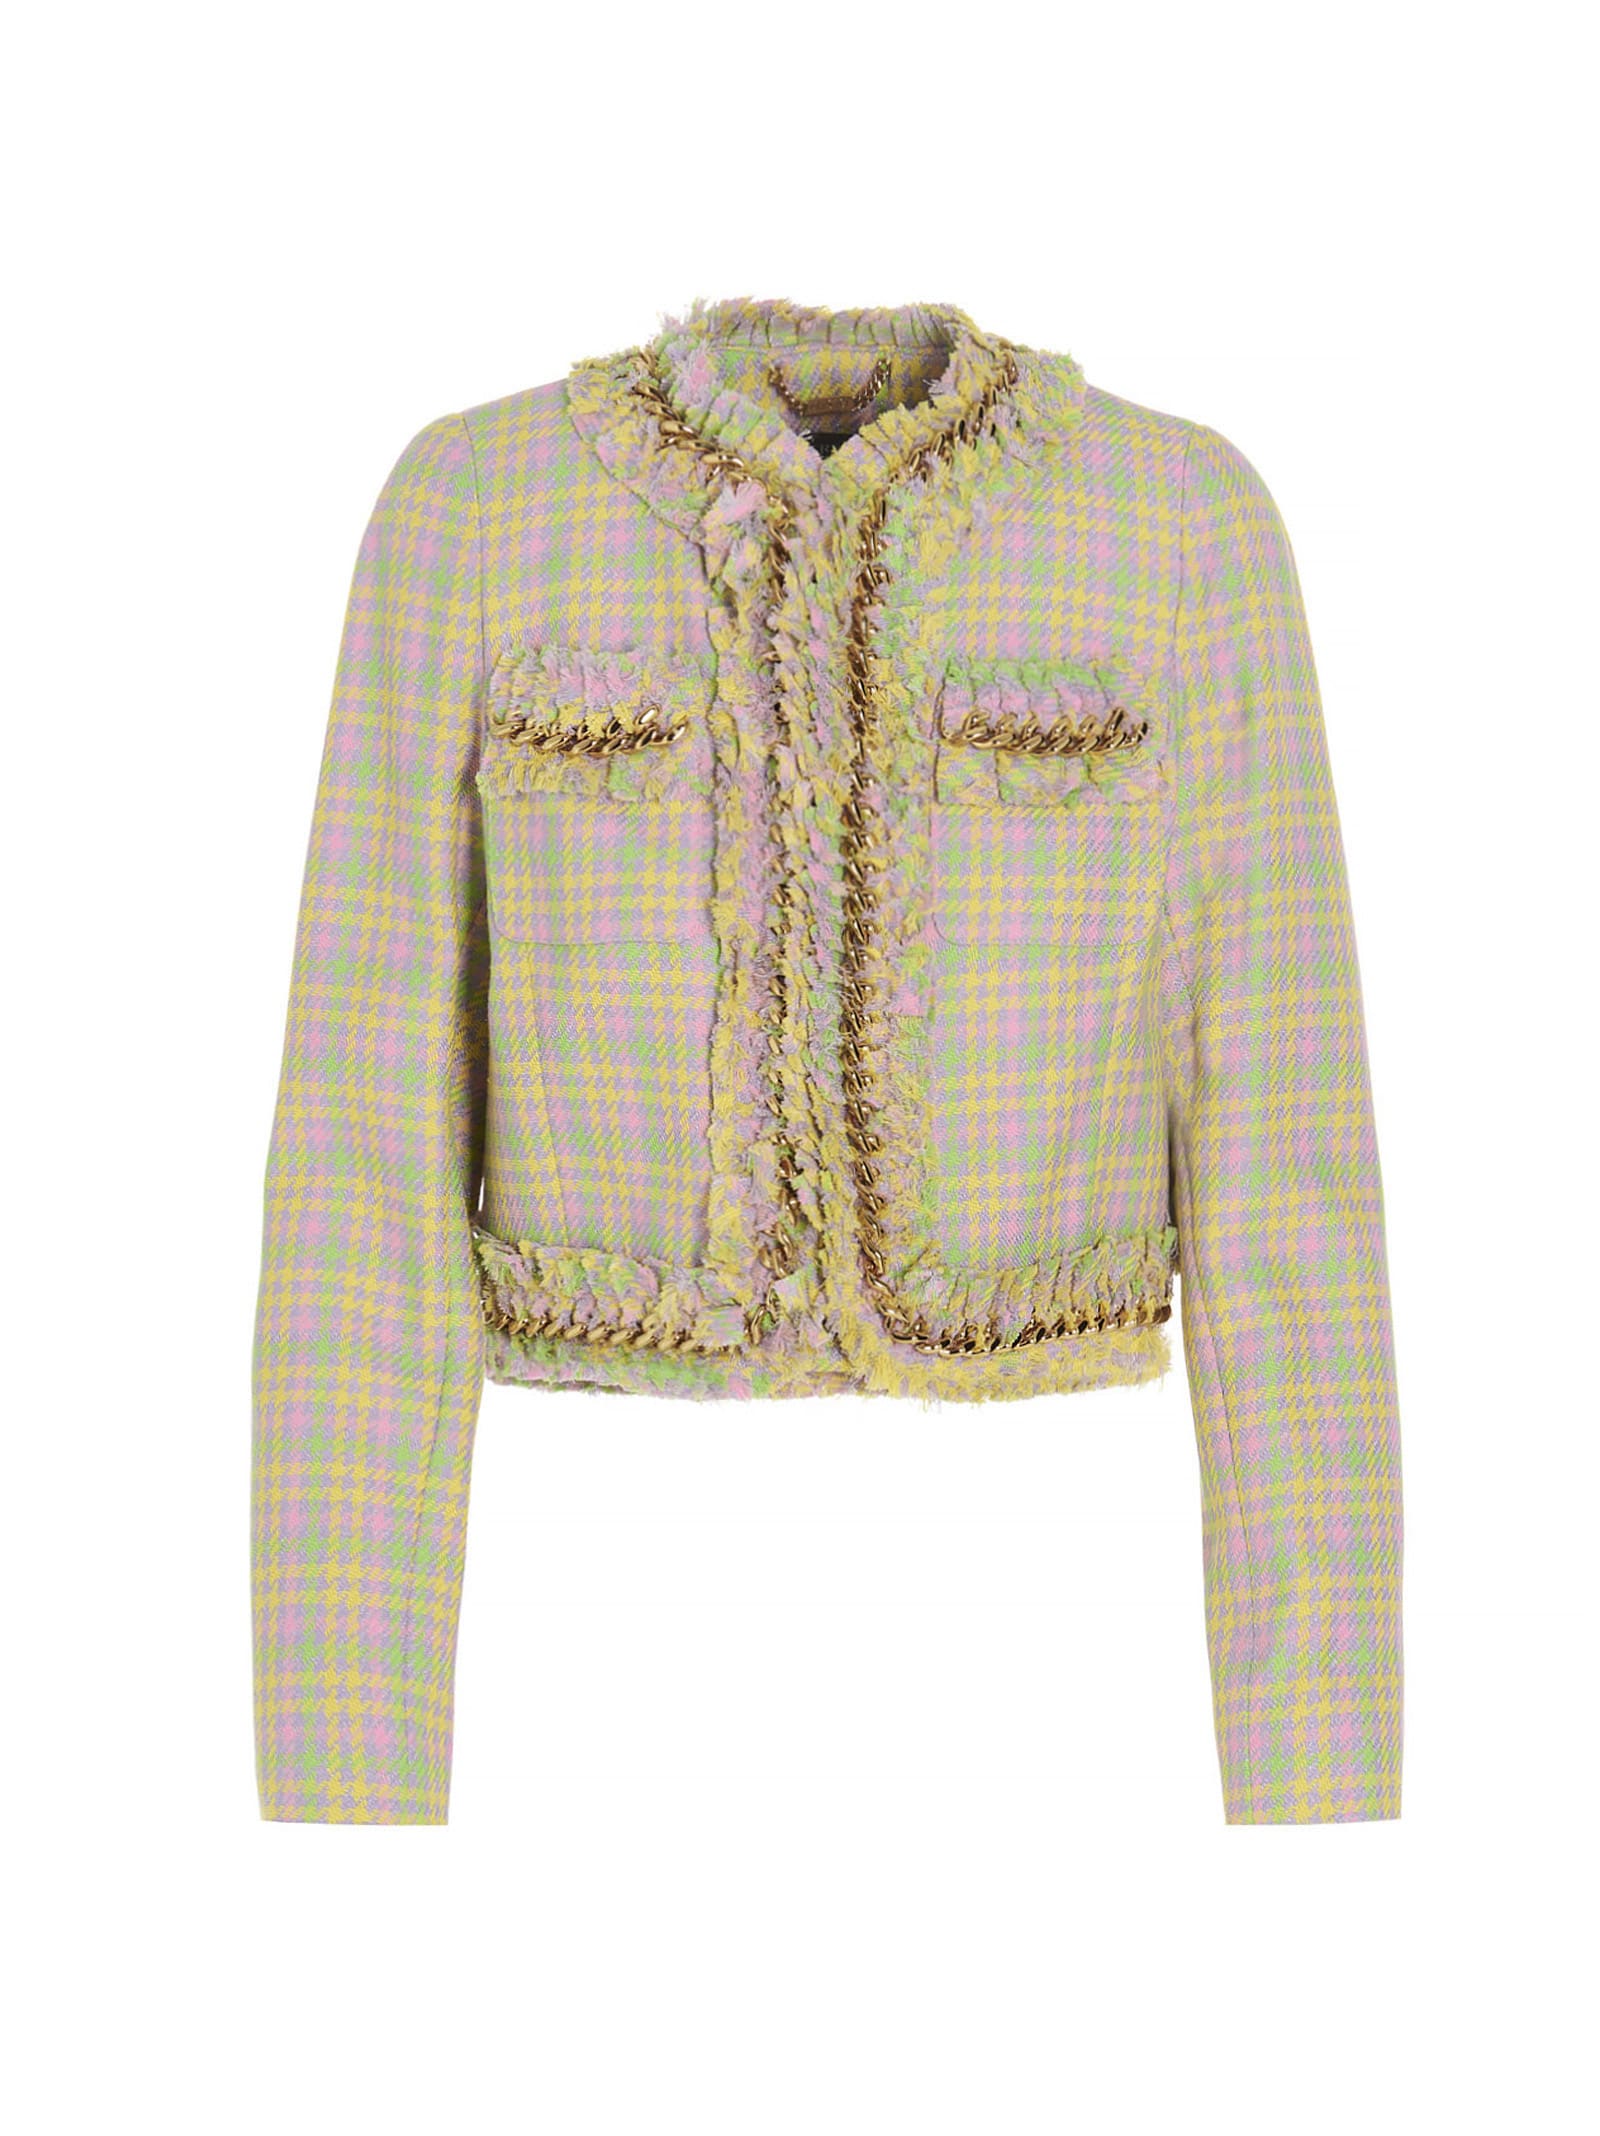 Versace chain Tweed Blazer Jacket